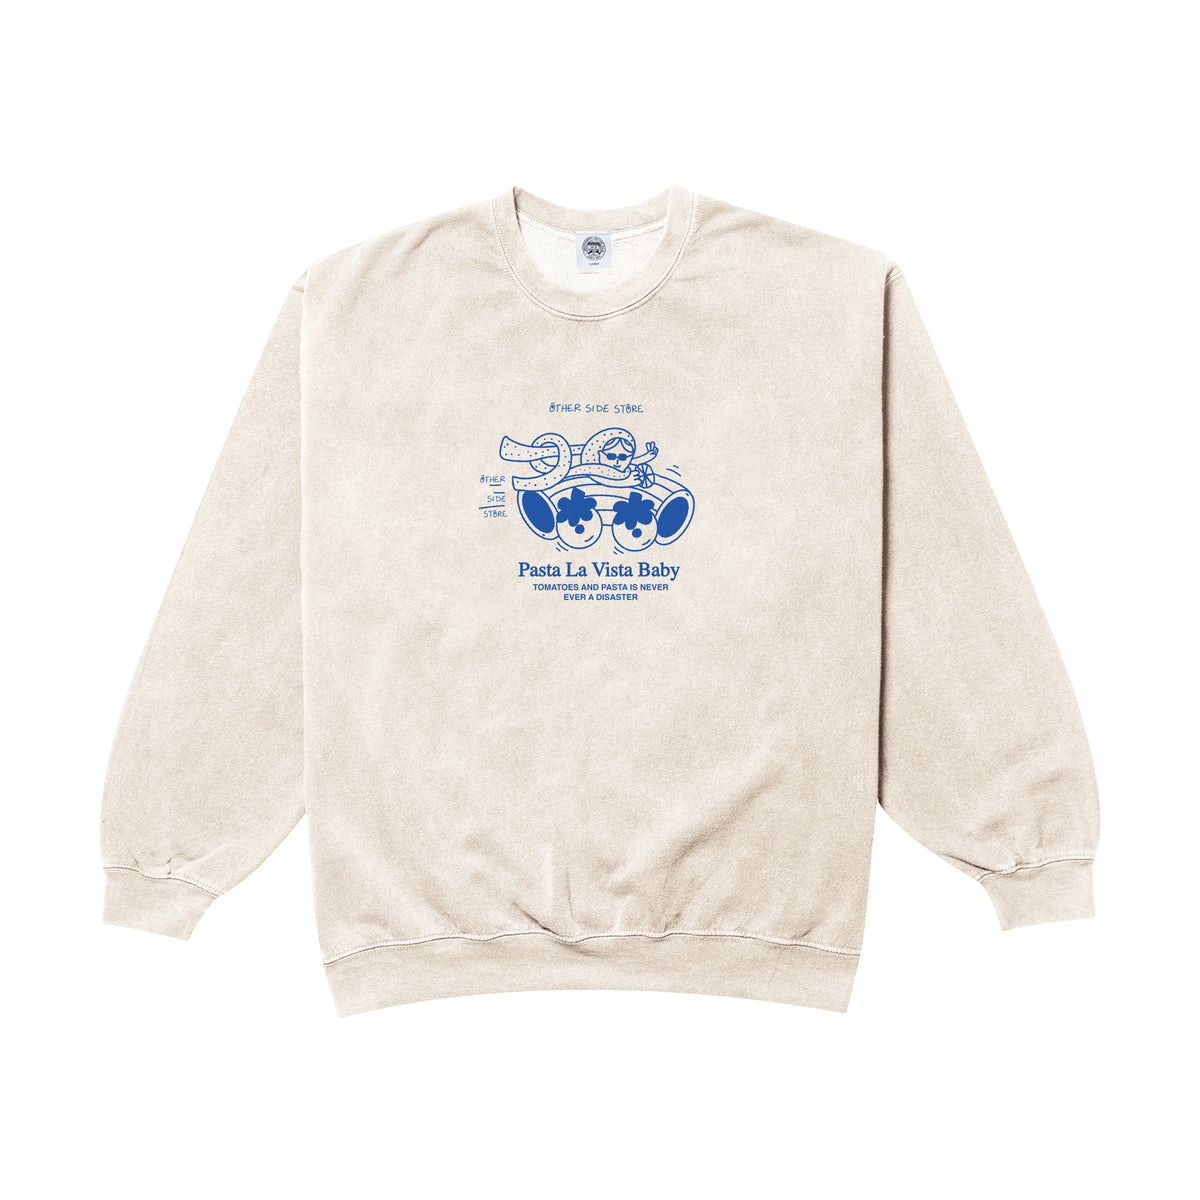 Other Side Store 'Pasta La Vista' Sweater - Vintage Washed Ecru – UN:IK ...